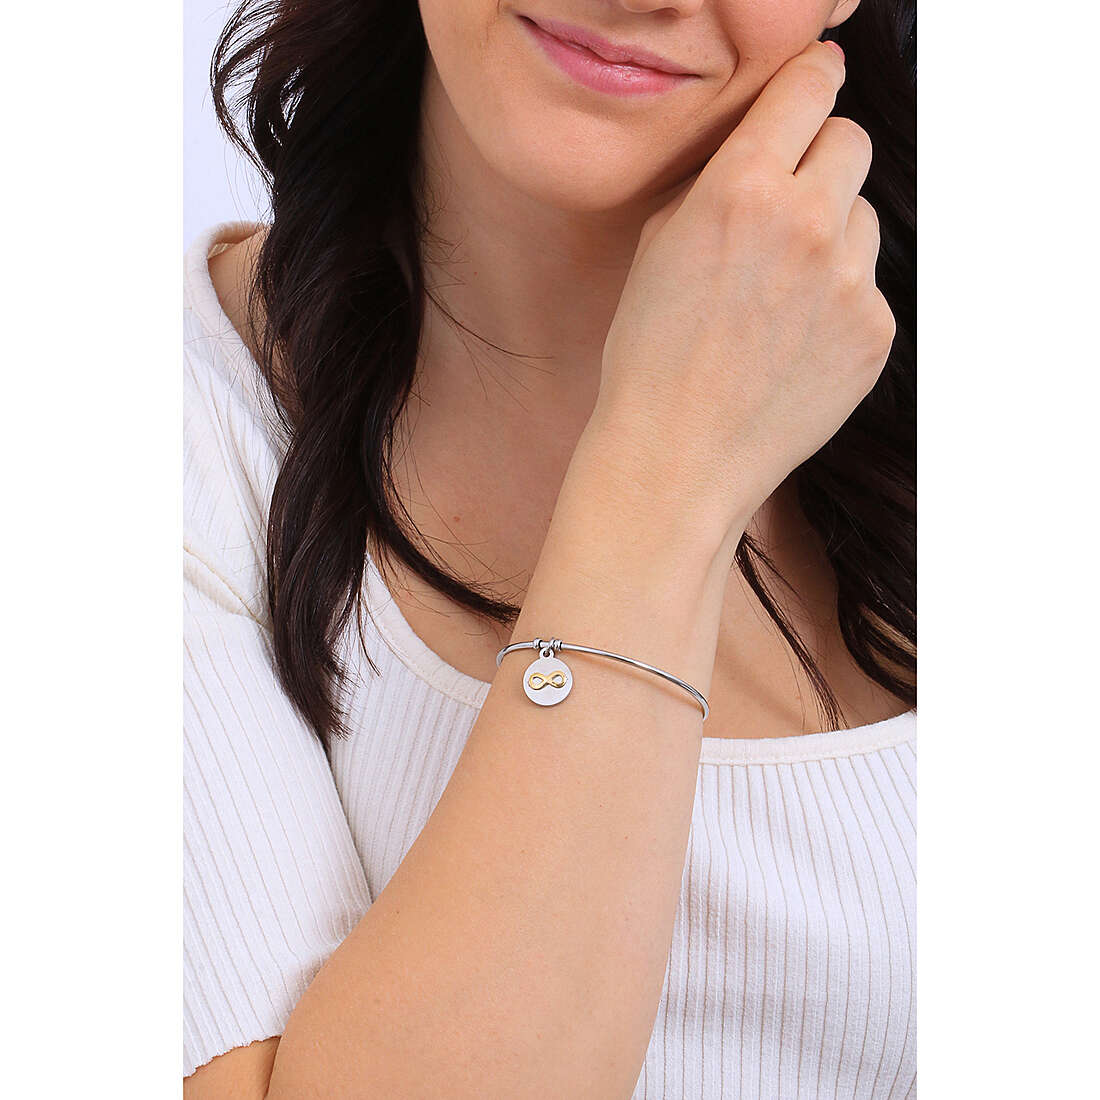 Kidult bracelets Symbols woman 732029 wearing